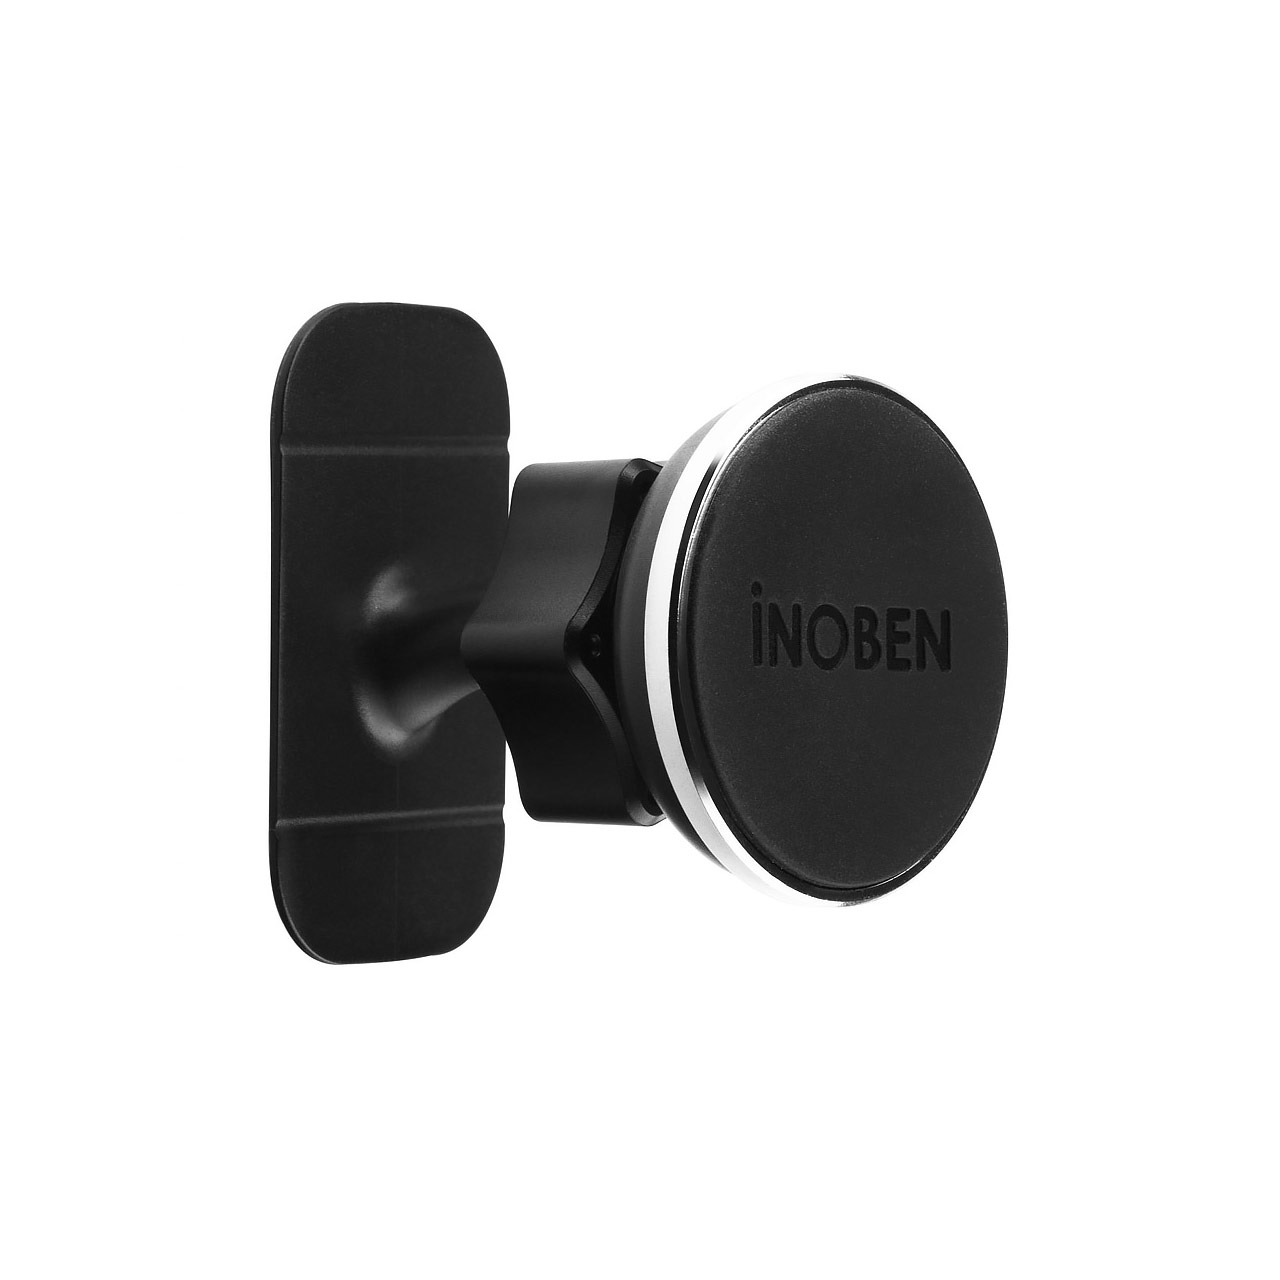 هولدر گوشی موبایل مگنتی iNOBEN مدل iMag Anywhere - مشکی